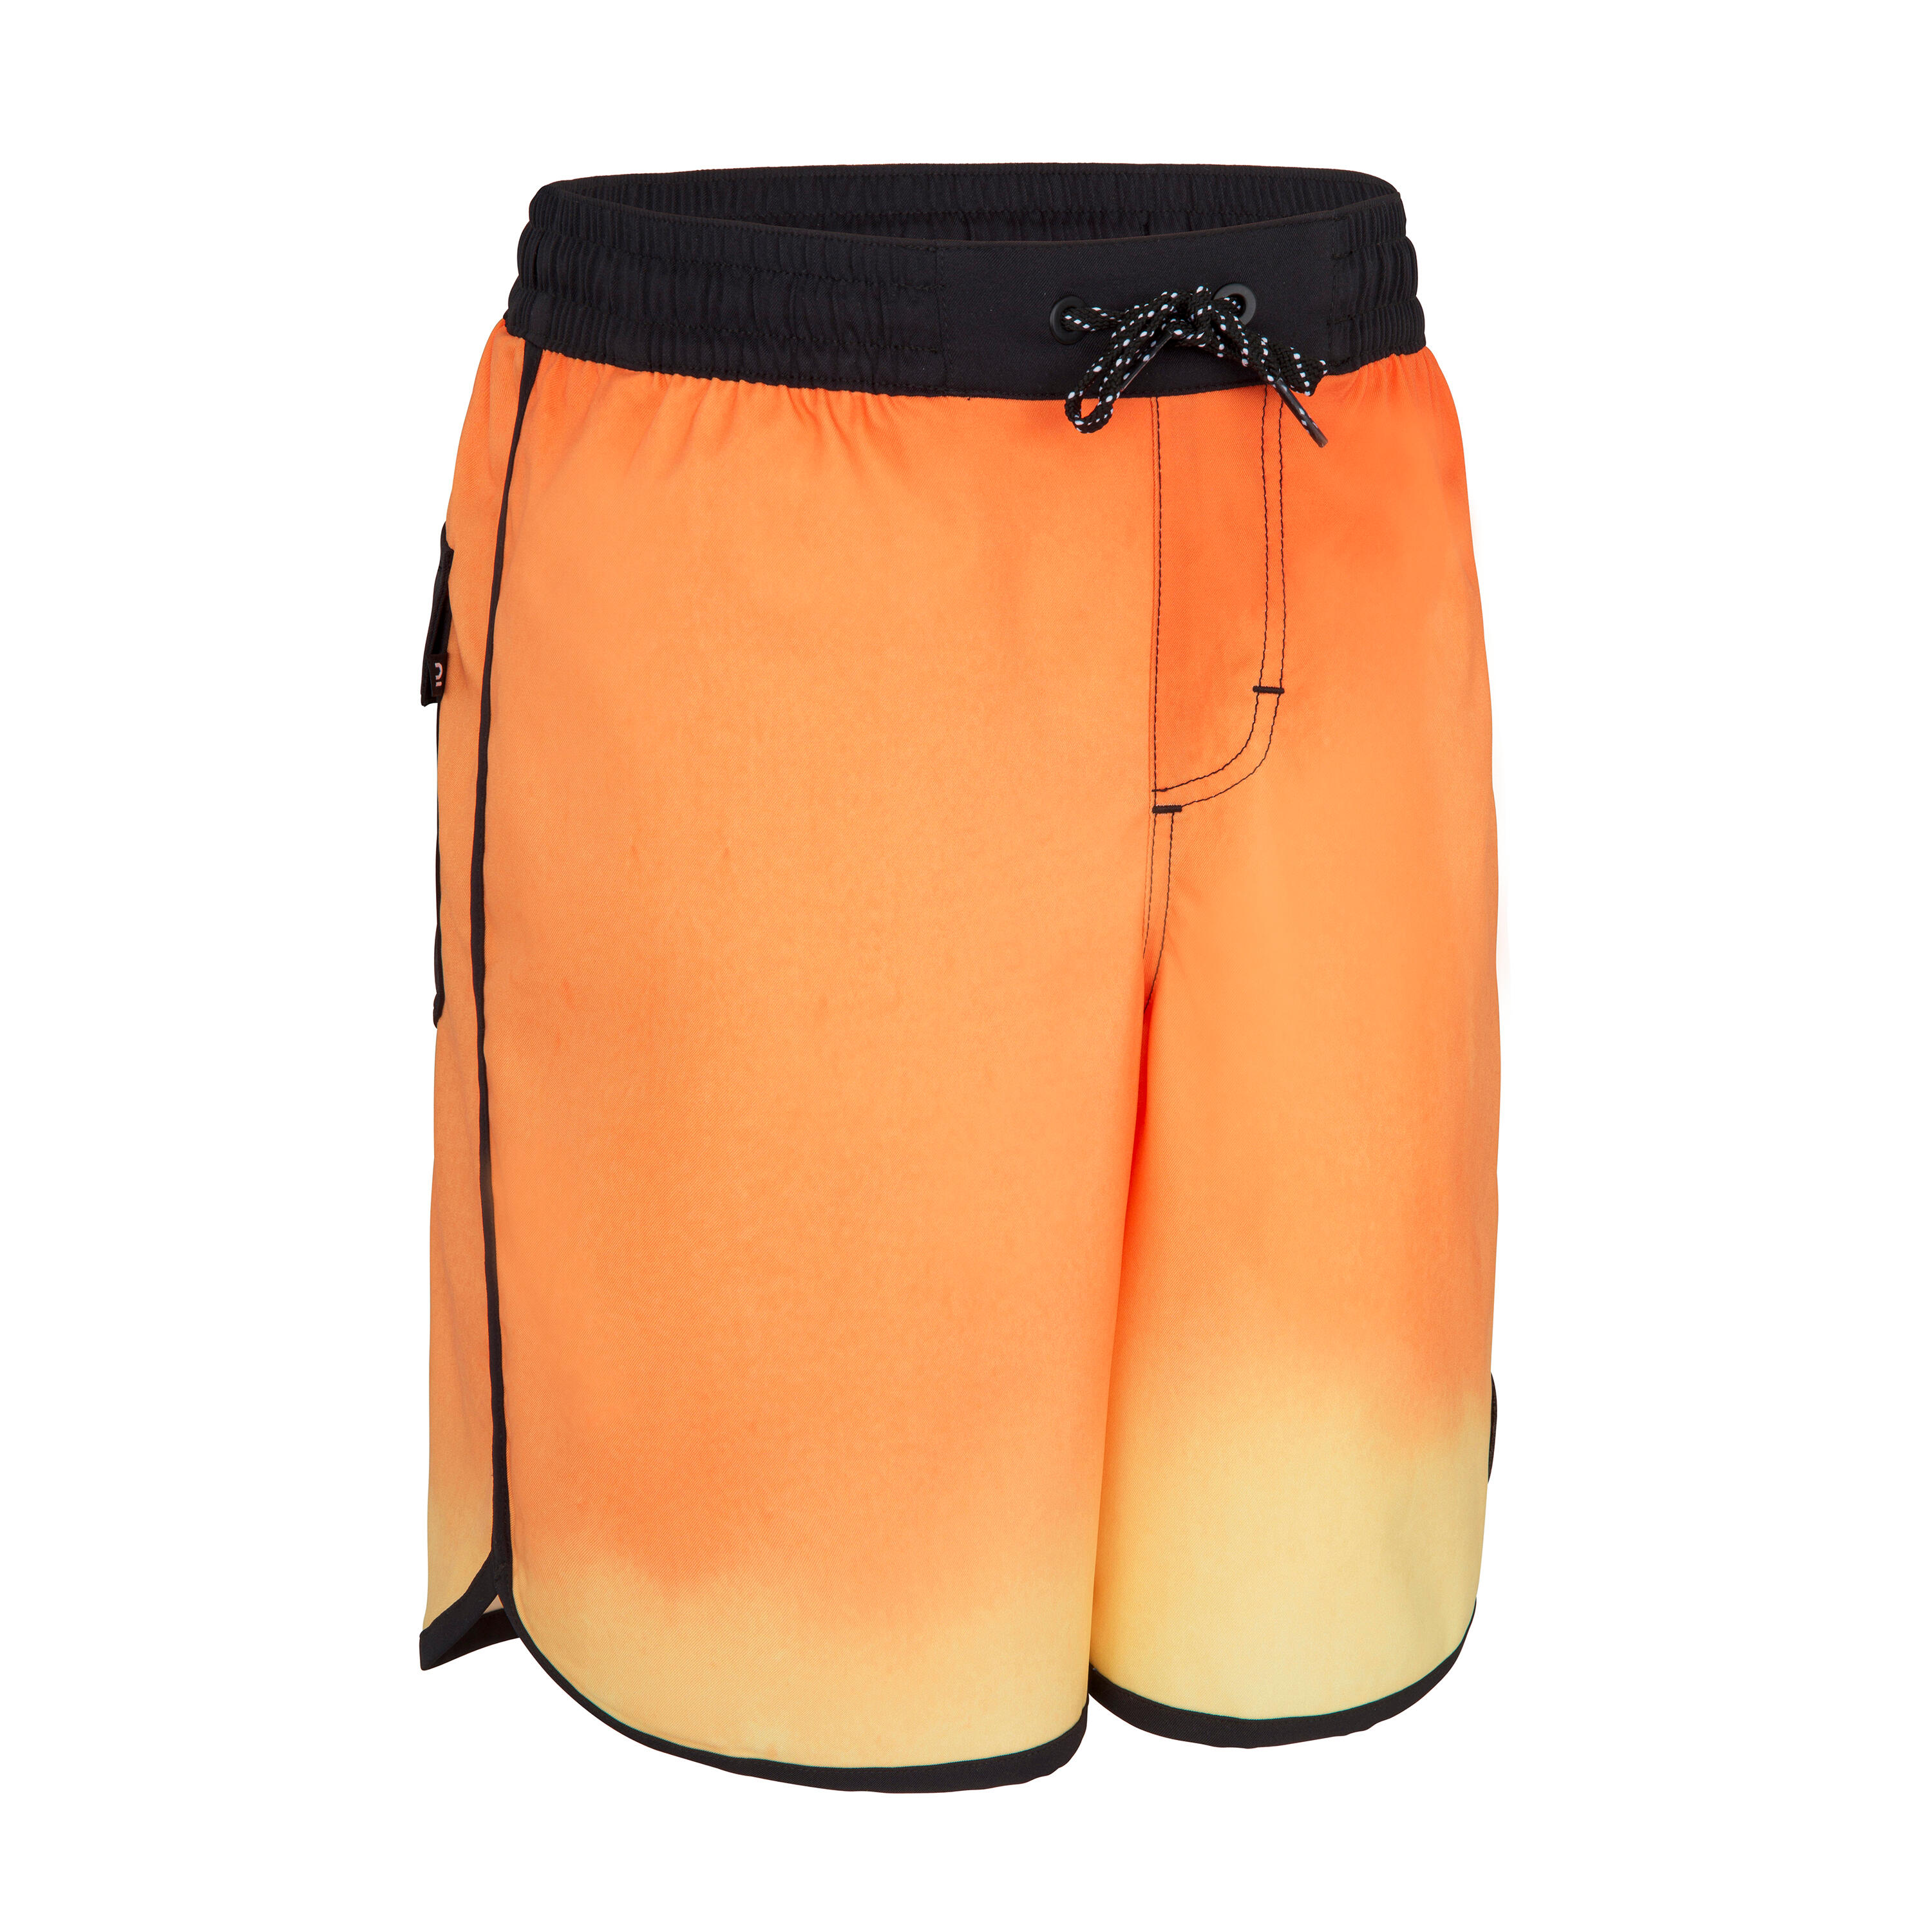 OLAIAN Boardshorts Jungen - Tie&Dye 500 orange Gr. 140 - 10 Jahre